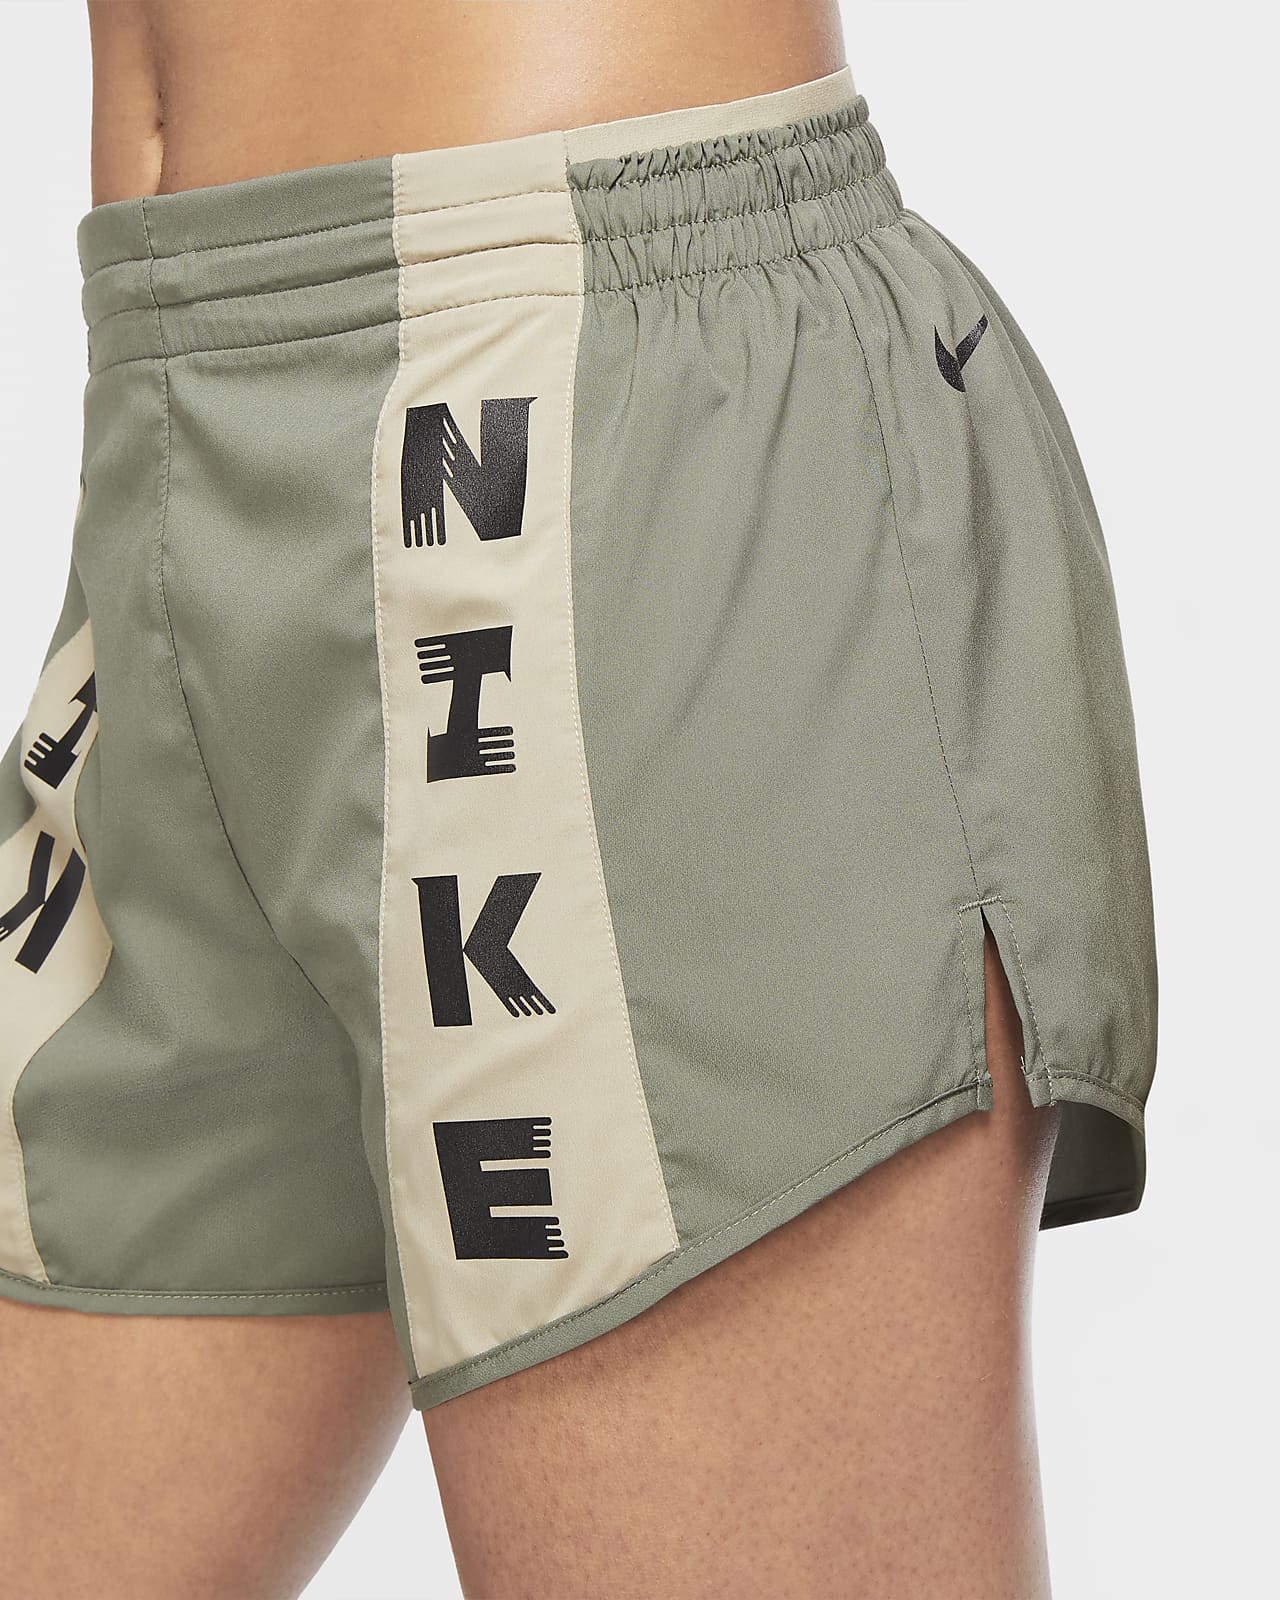 nike women's icon clash tempo printed running shorts